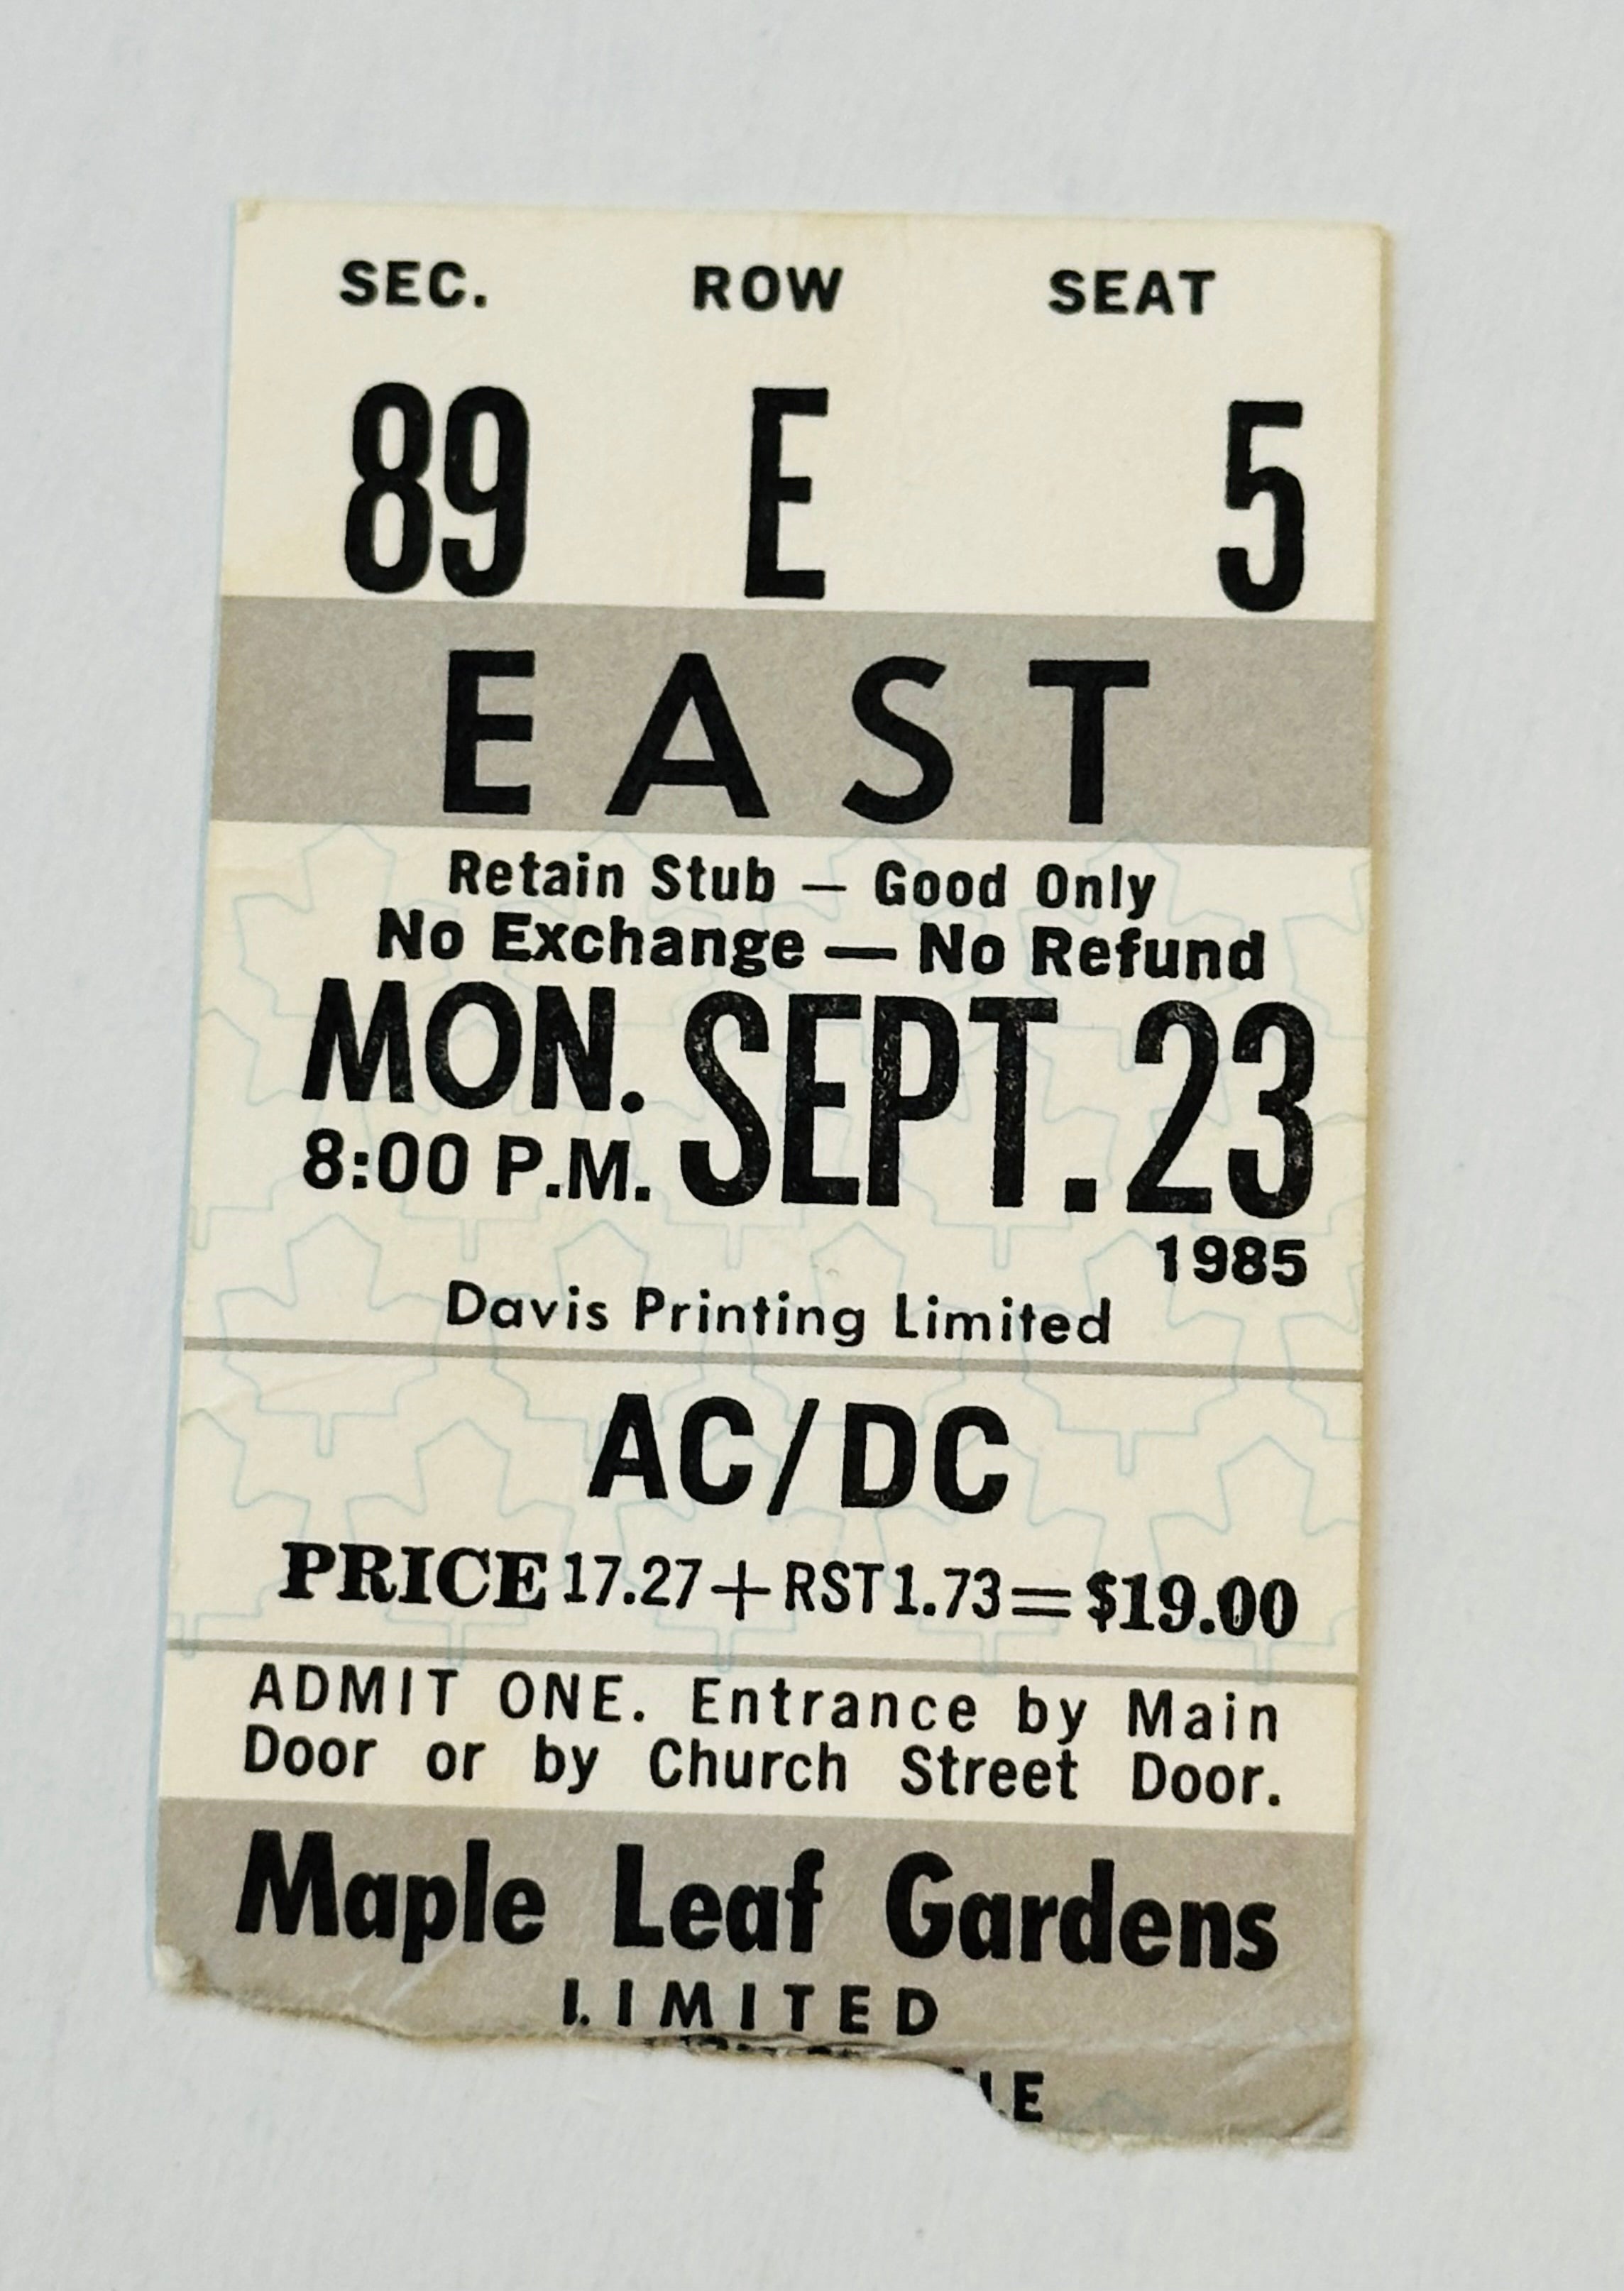 AC/DC rare Maple leaf gardens concert ticket 1985